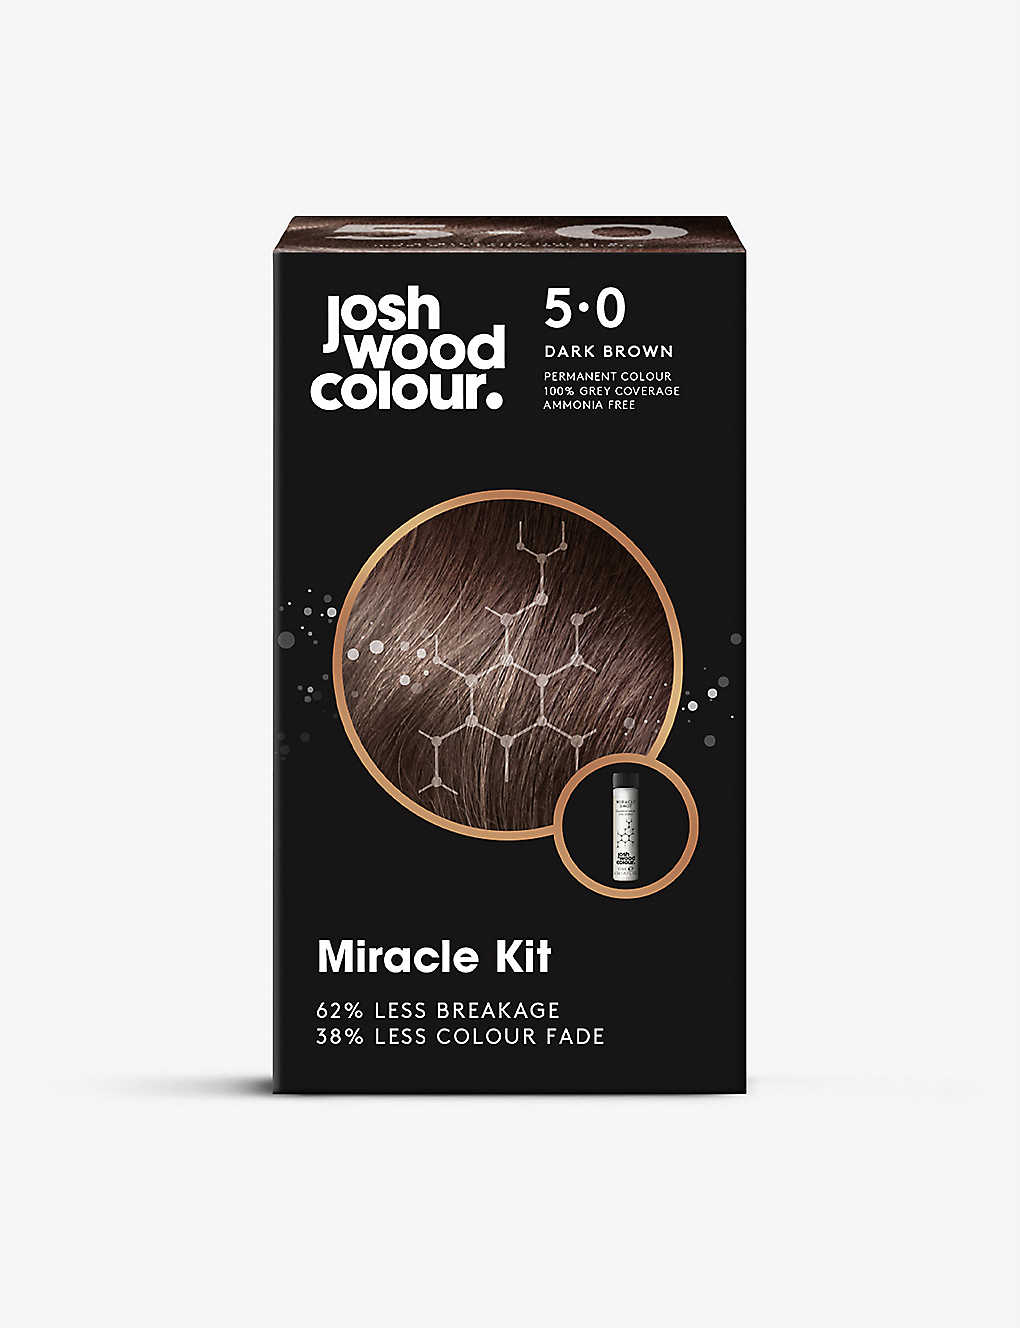 Josh Wood Colour Colour Miracle Kit Permanent Hair Dye In 5.0 Dark Brown